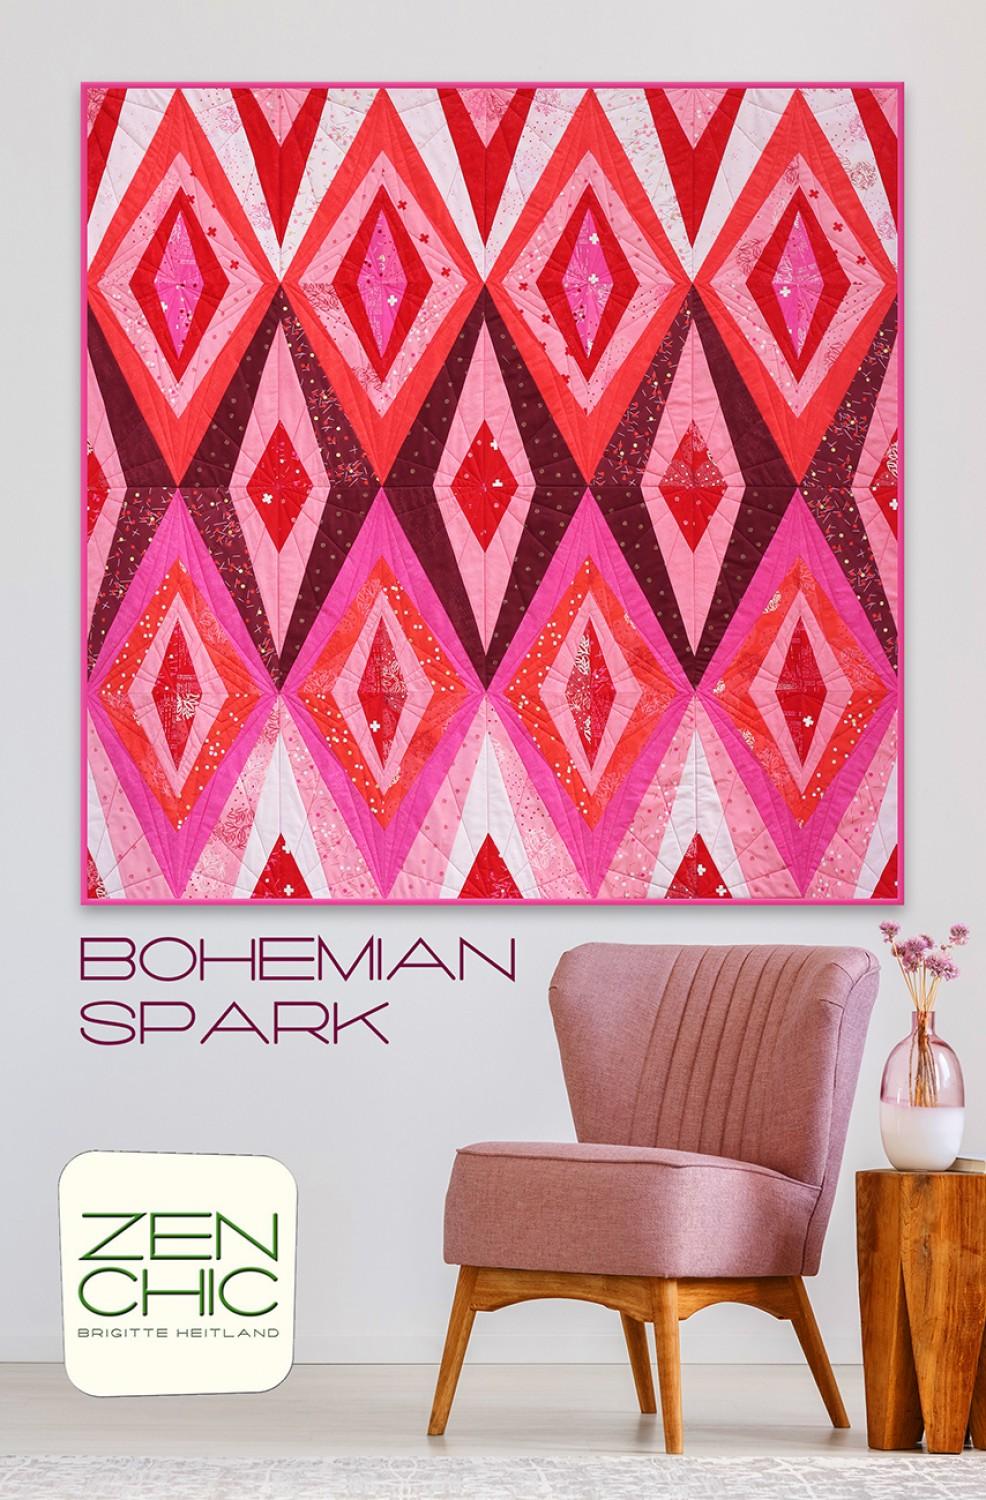 Bohemian Spark